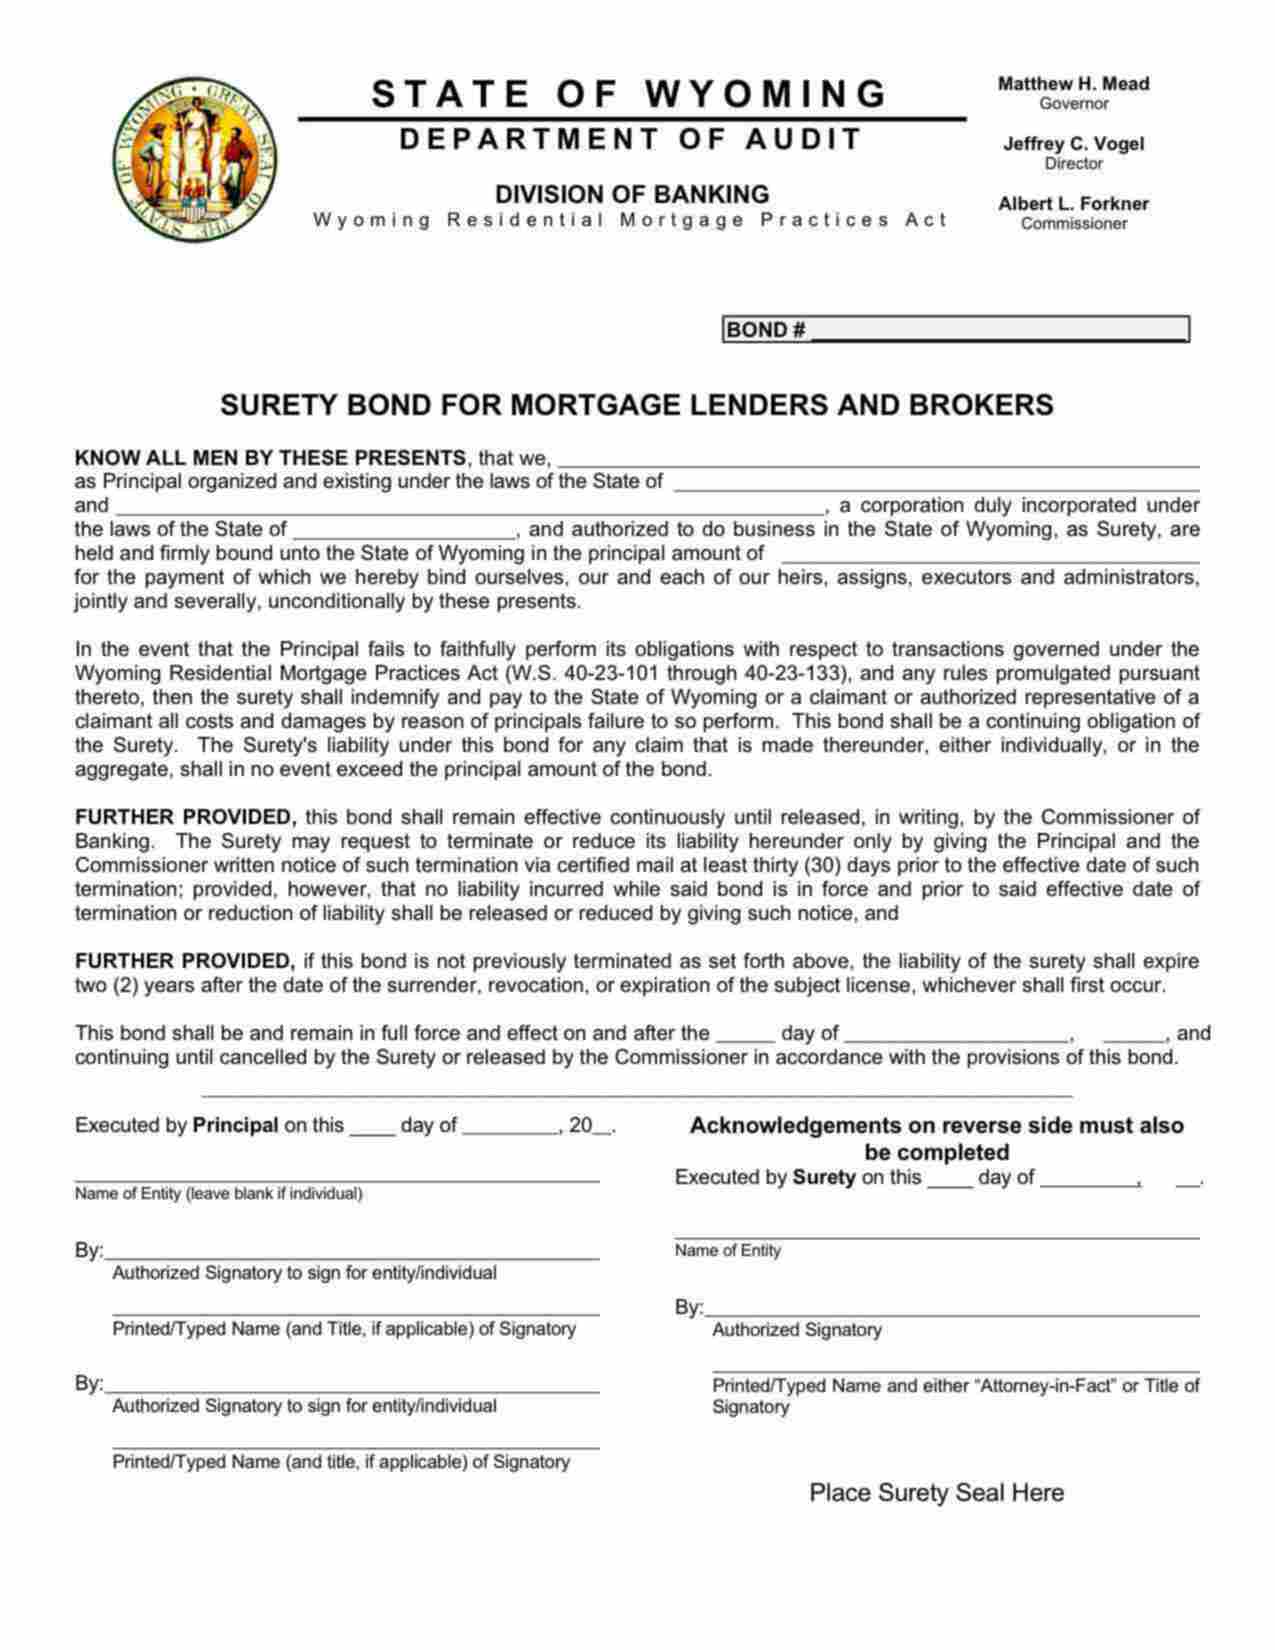 Wyoming Mortgage Lender/Broker License - Mortgage Loan Originator Bond Bond Form